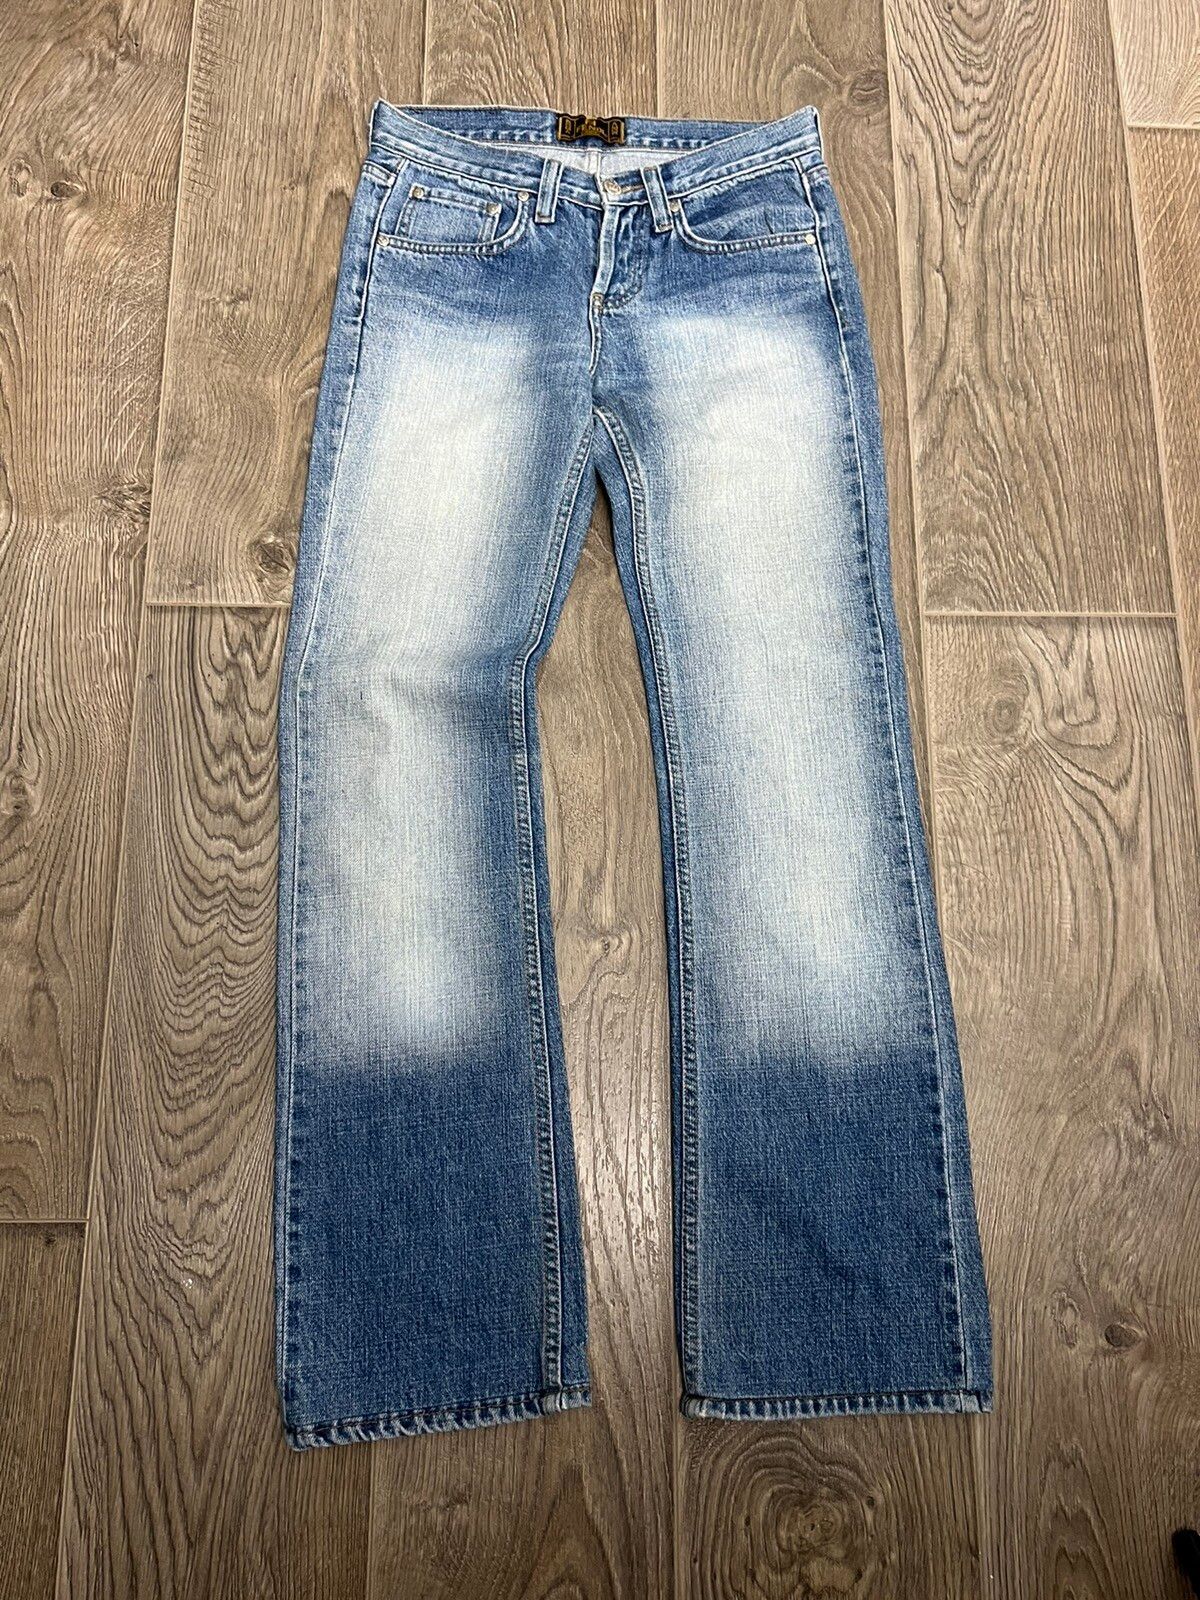 Fendi Vintage Fendi jeans bootcut washed denim 80s | Grailed